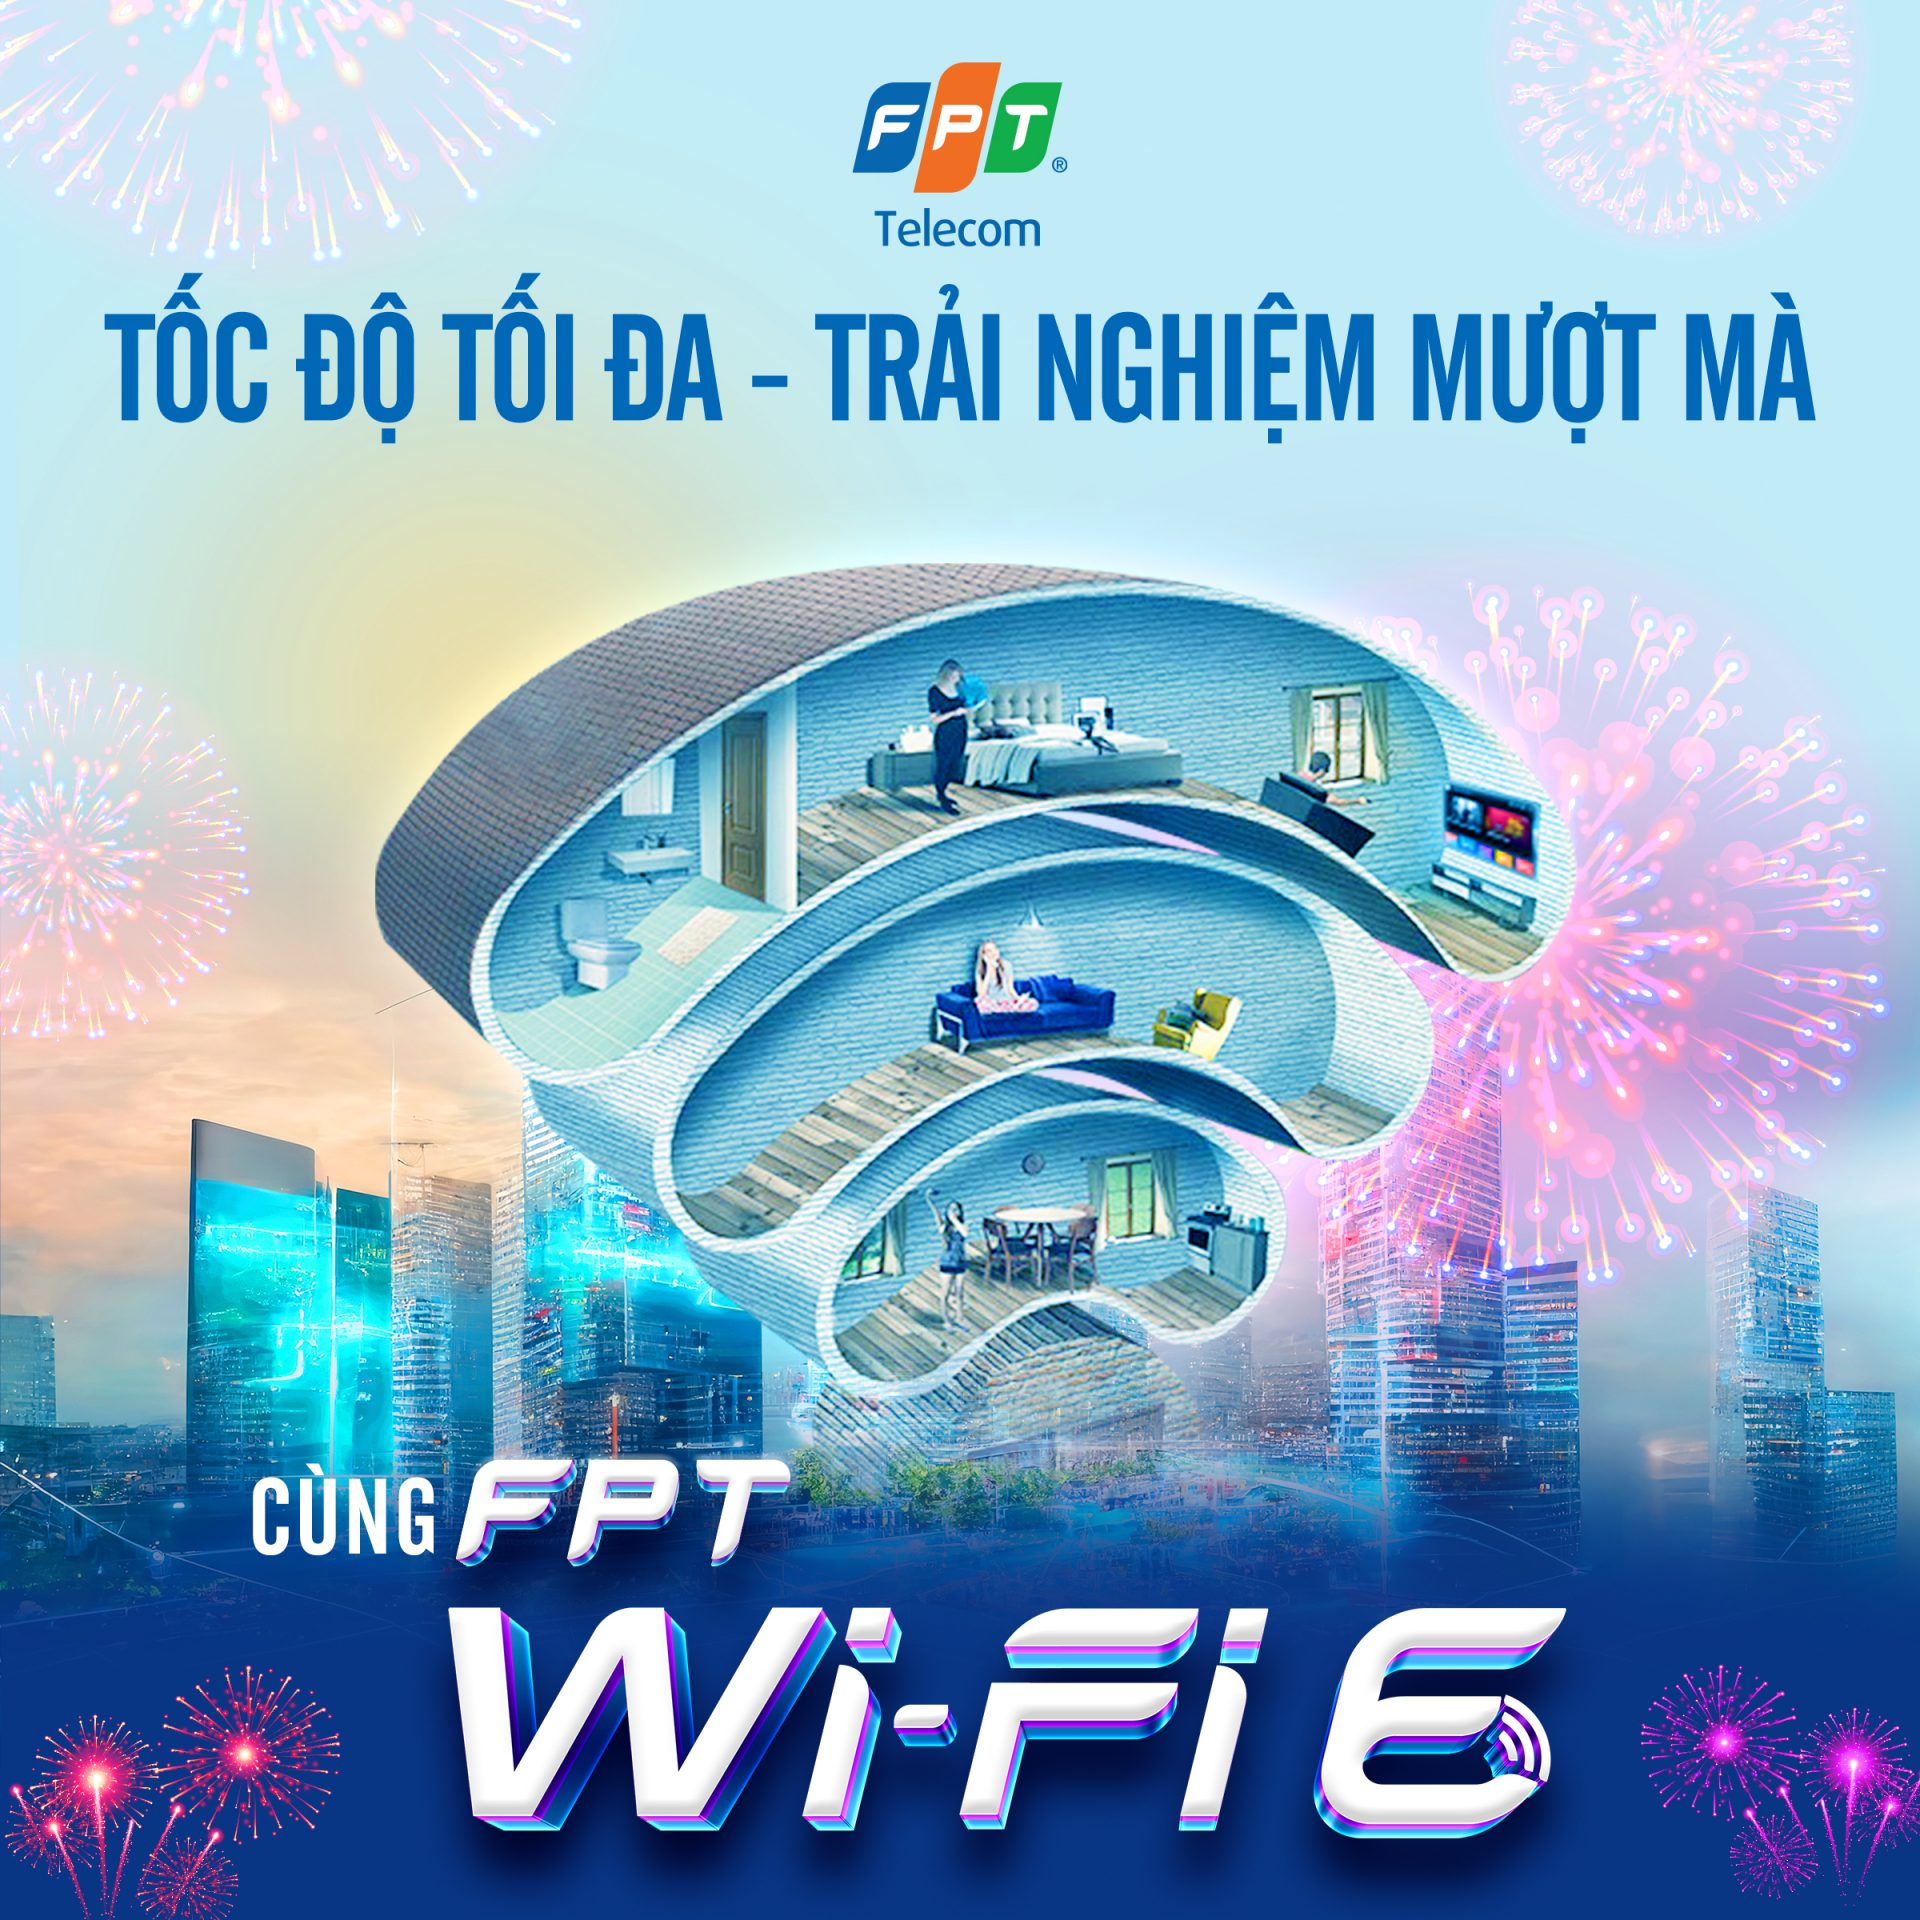 fpt wifi 6